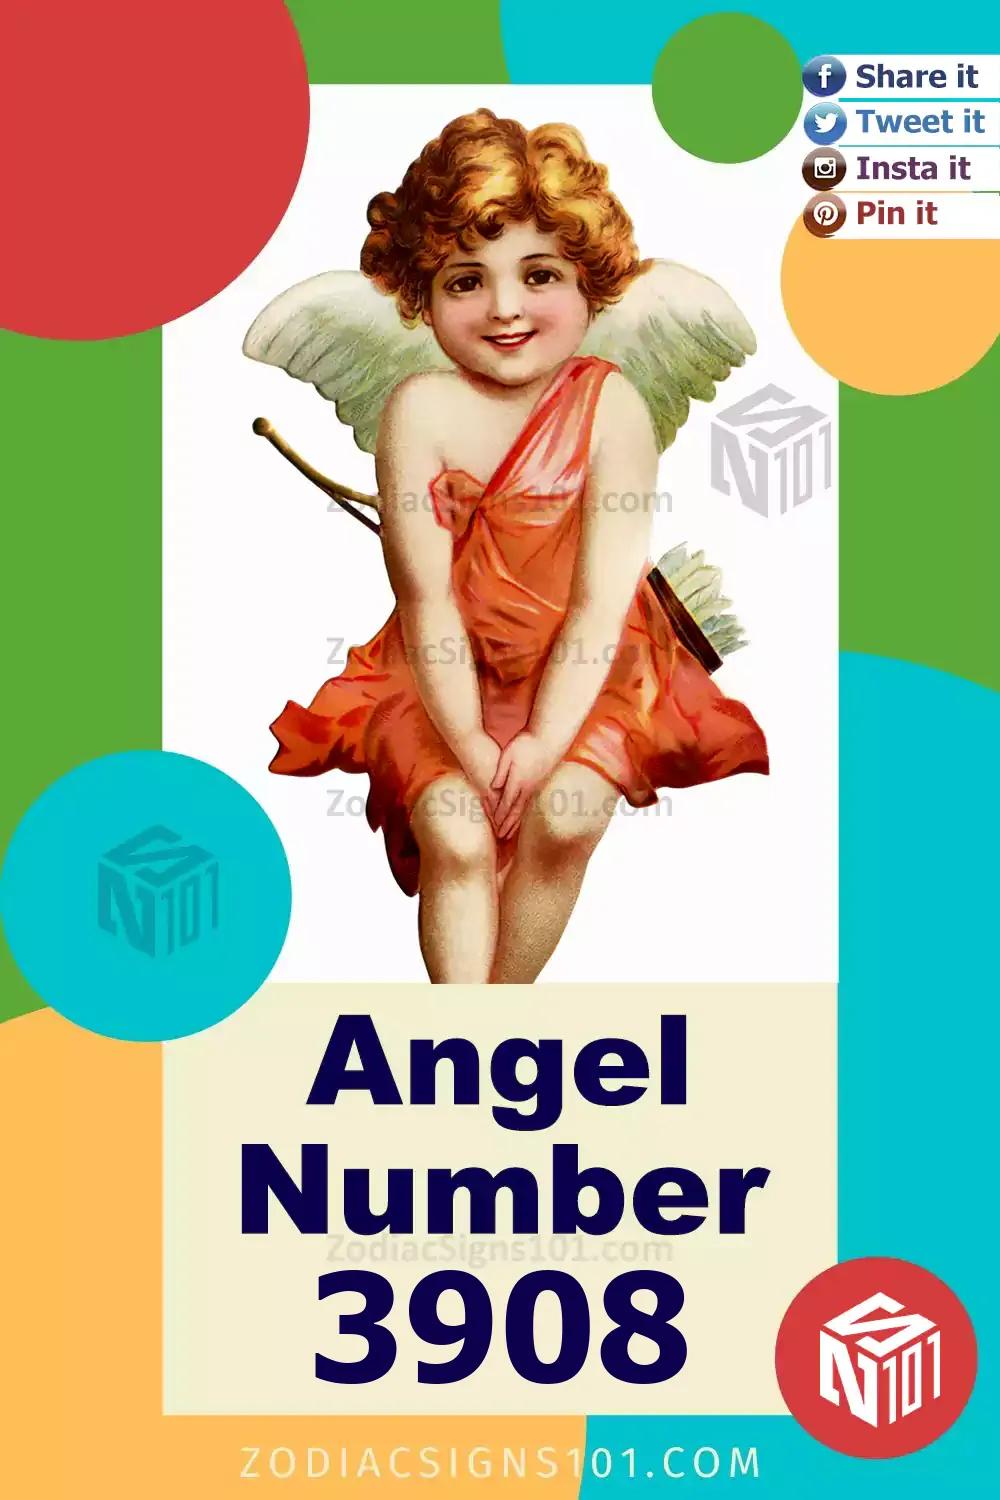 3908-Angel-Number-Meaning.jpg